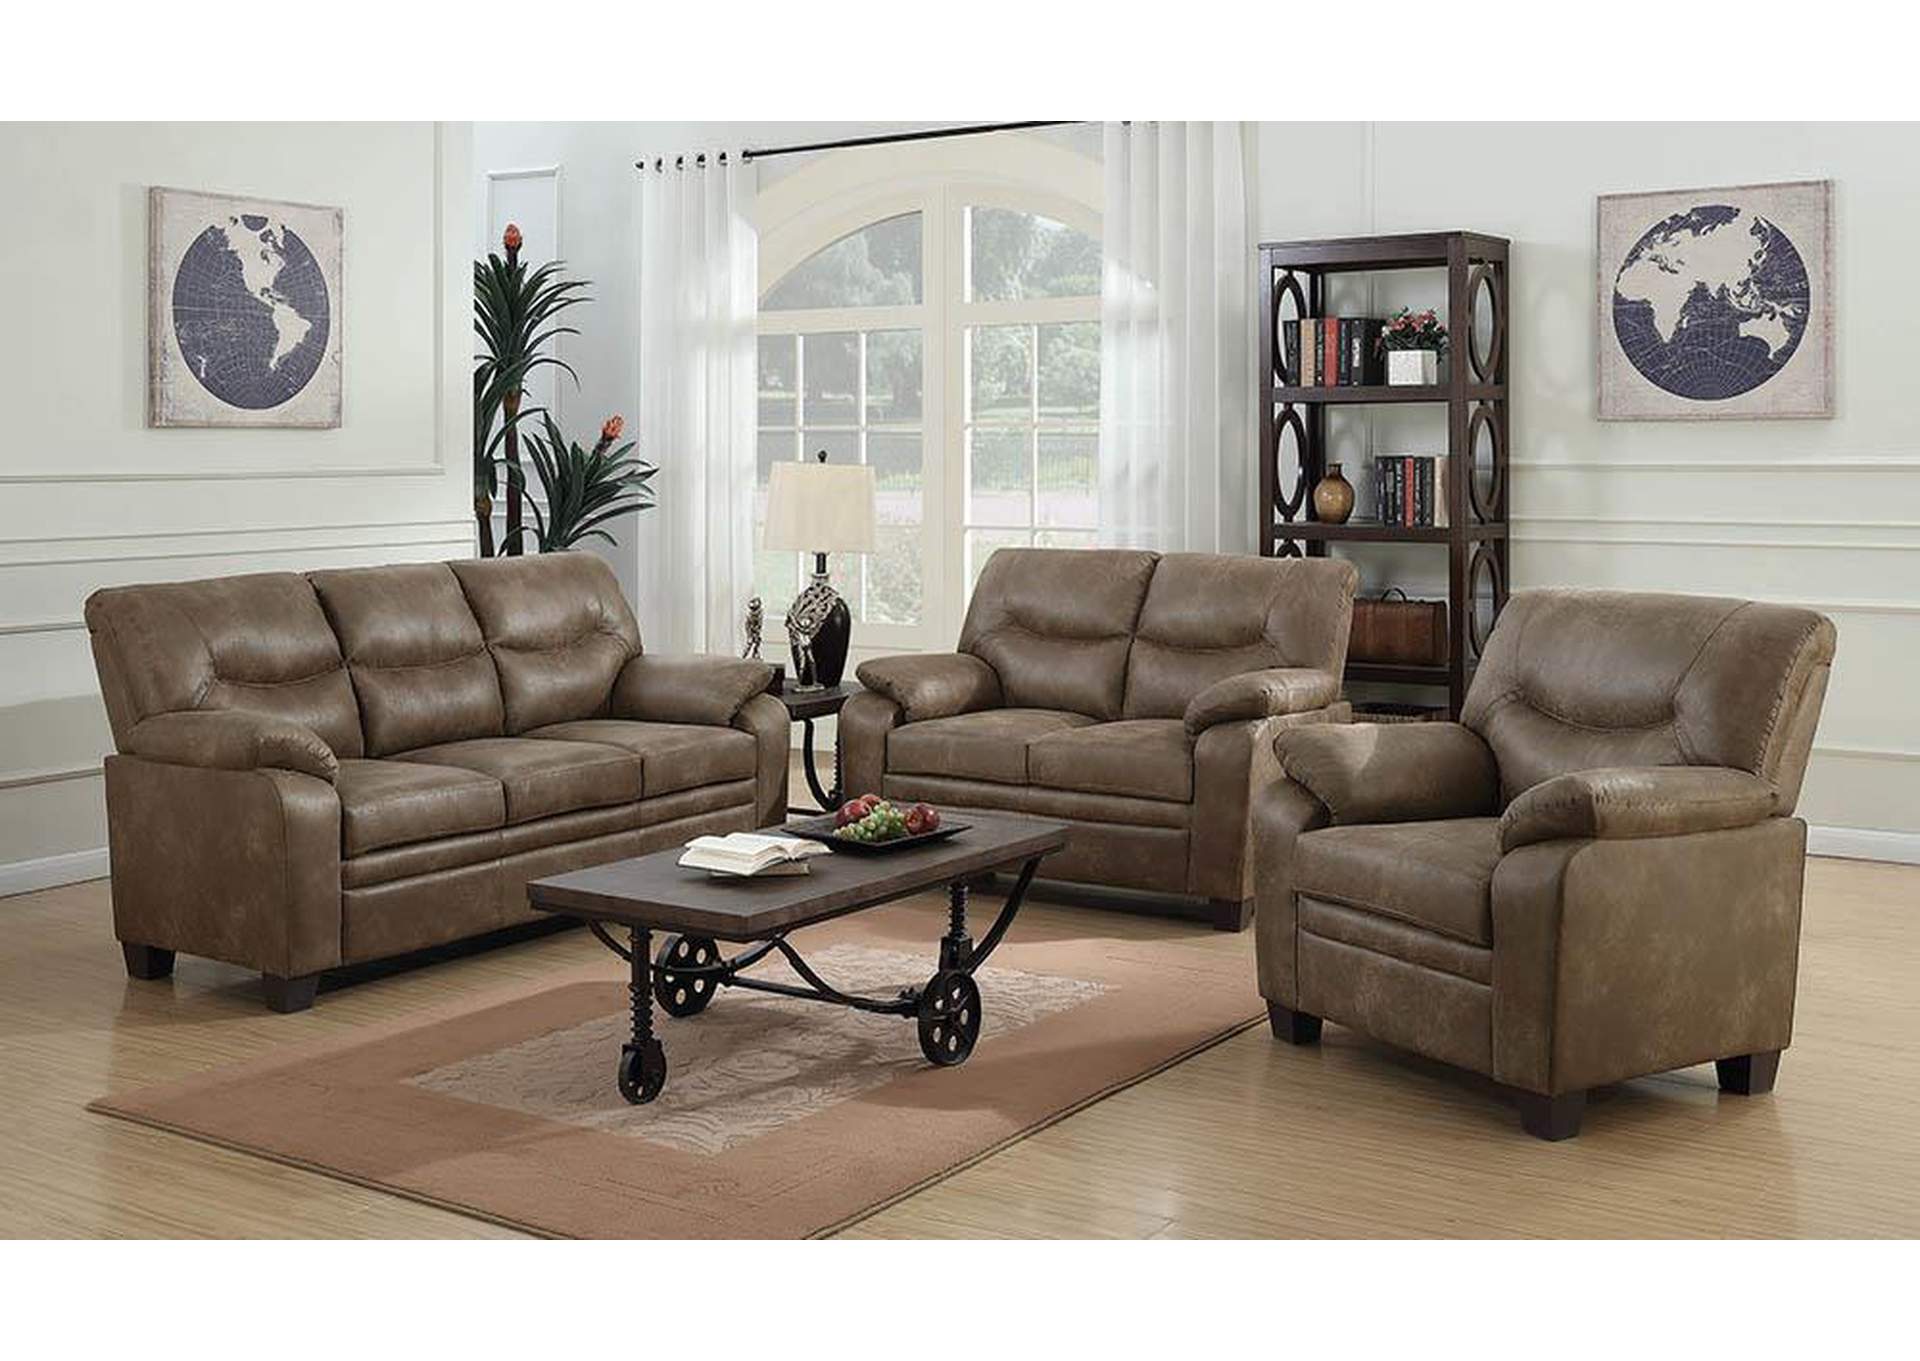 Michael S Discount Furniture Meagan Brown Sofa